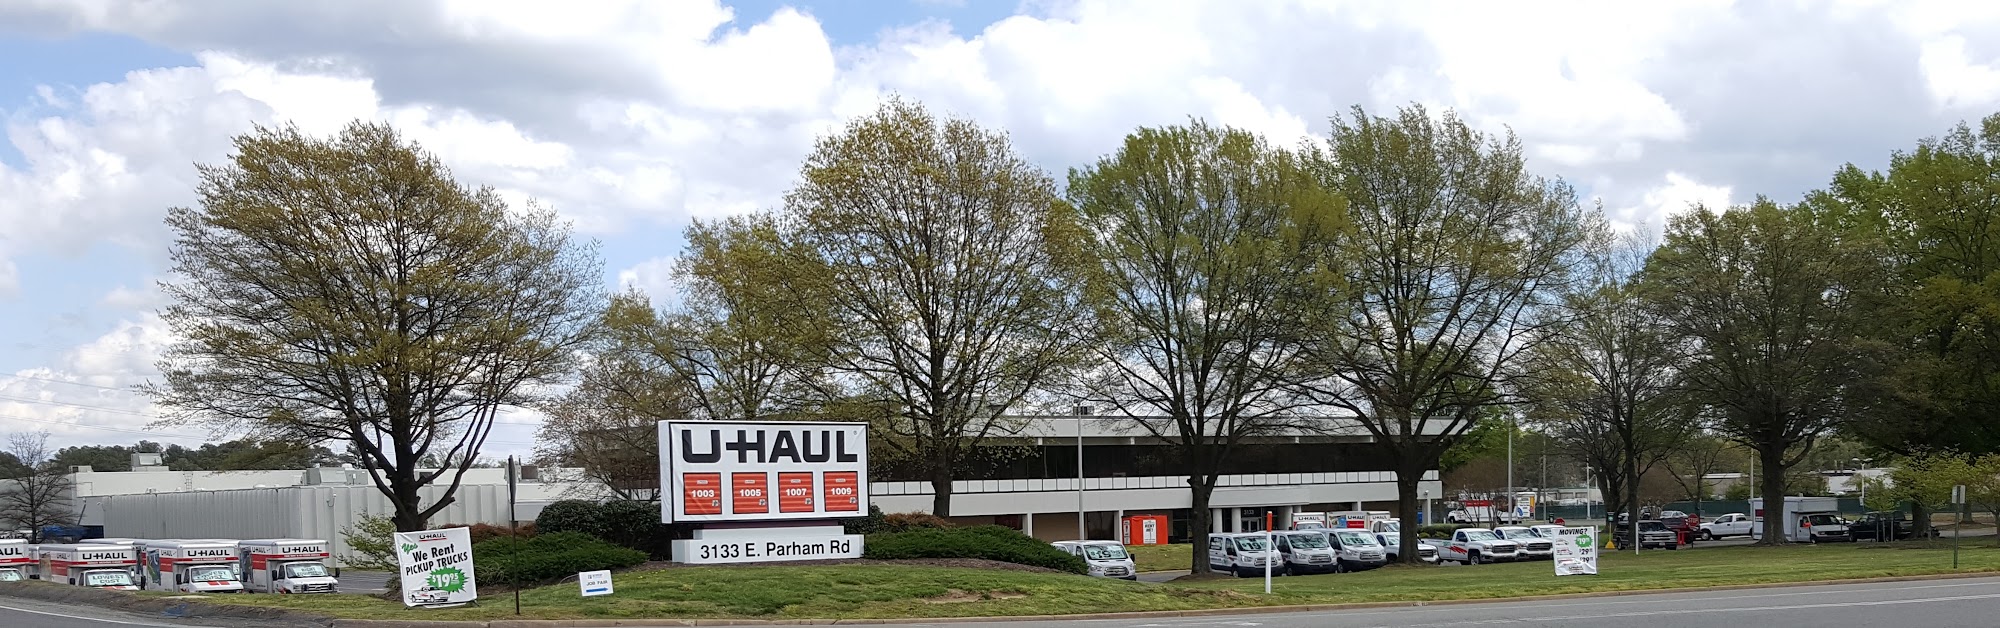 U-Haul Moving & Storage of Parham Rd